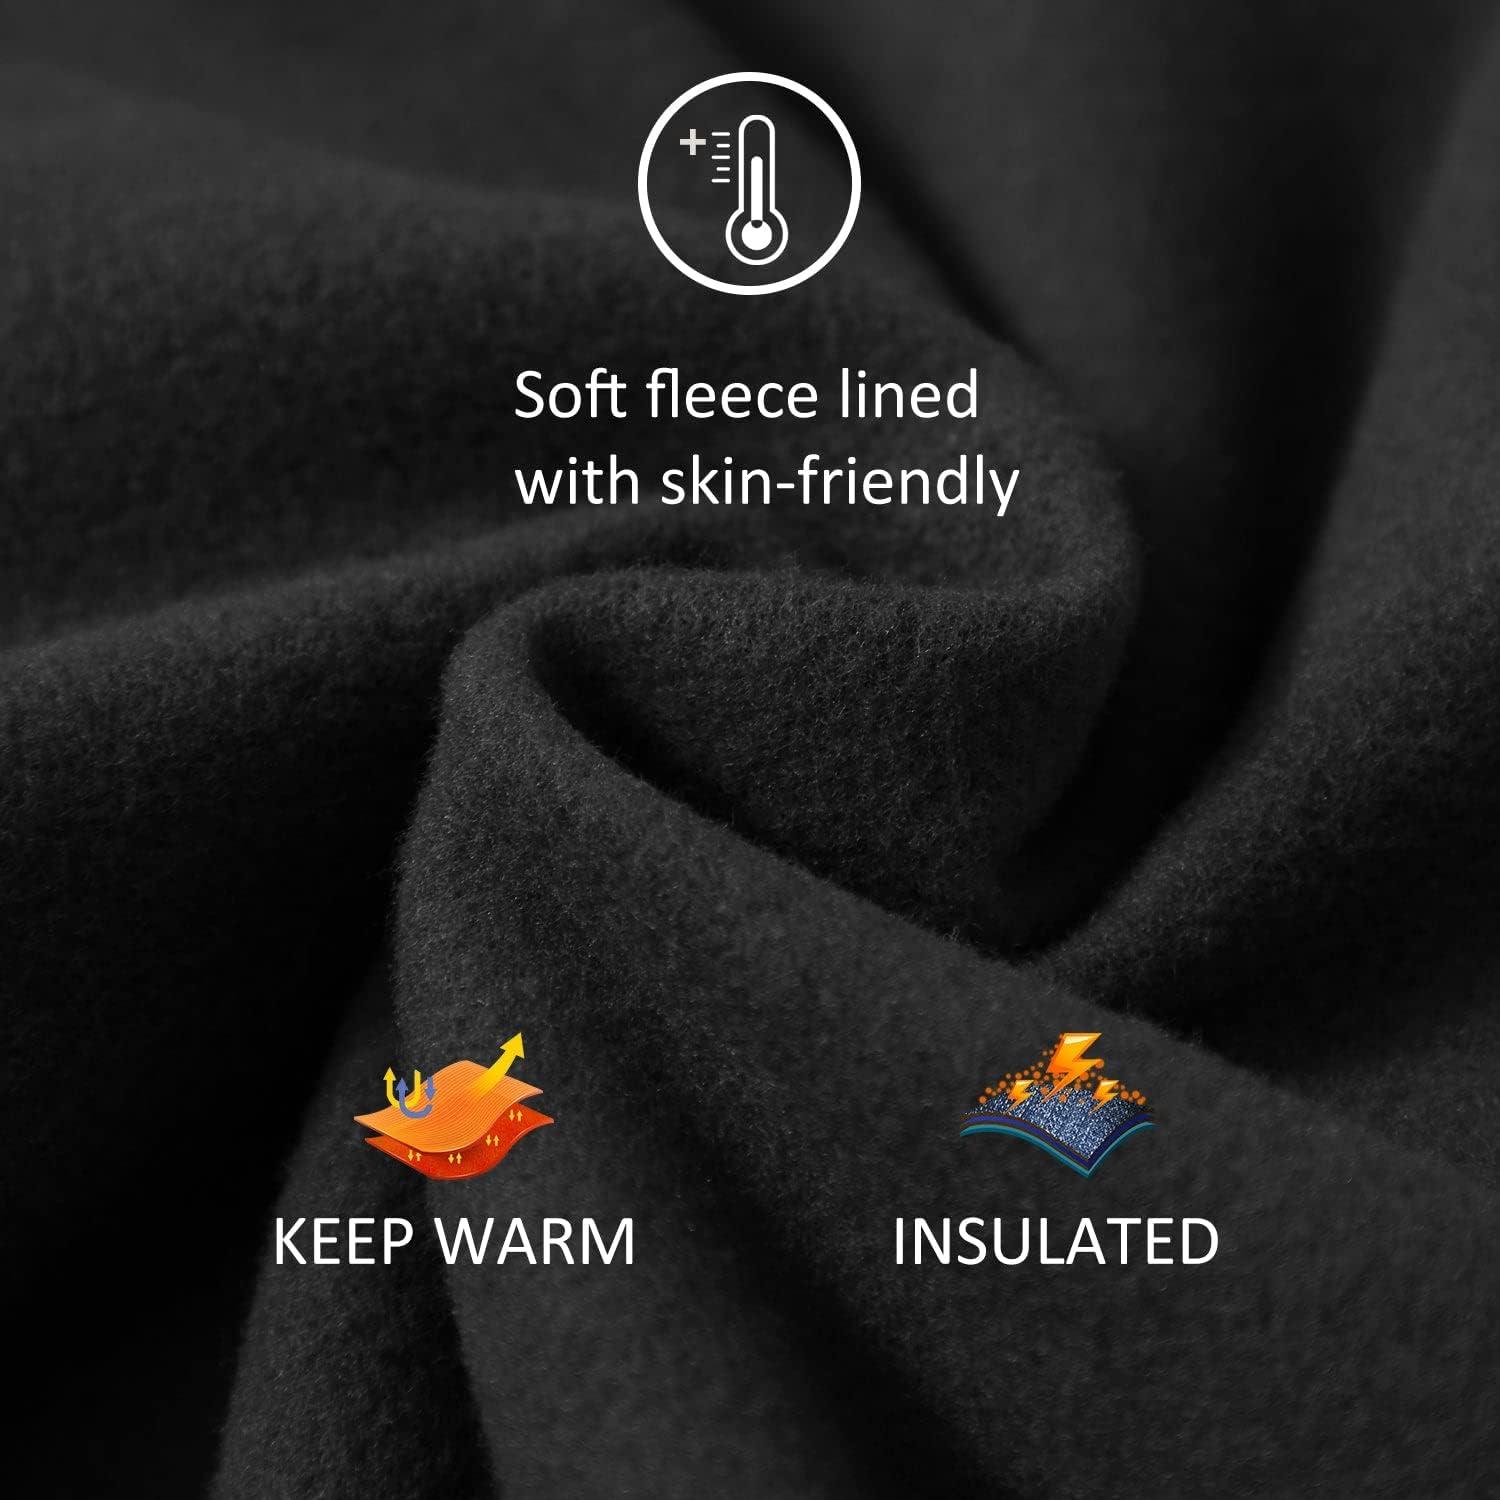 BALEAF Women's Fleece Lined Water Resistant Legging High Waisted Thermal  Winter Hiking Running Pants Pockets Medium Black